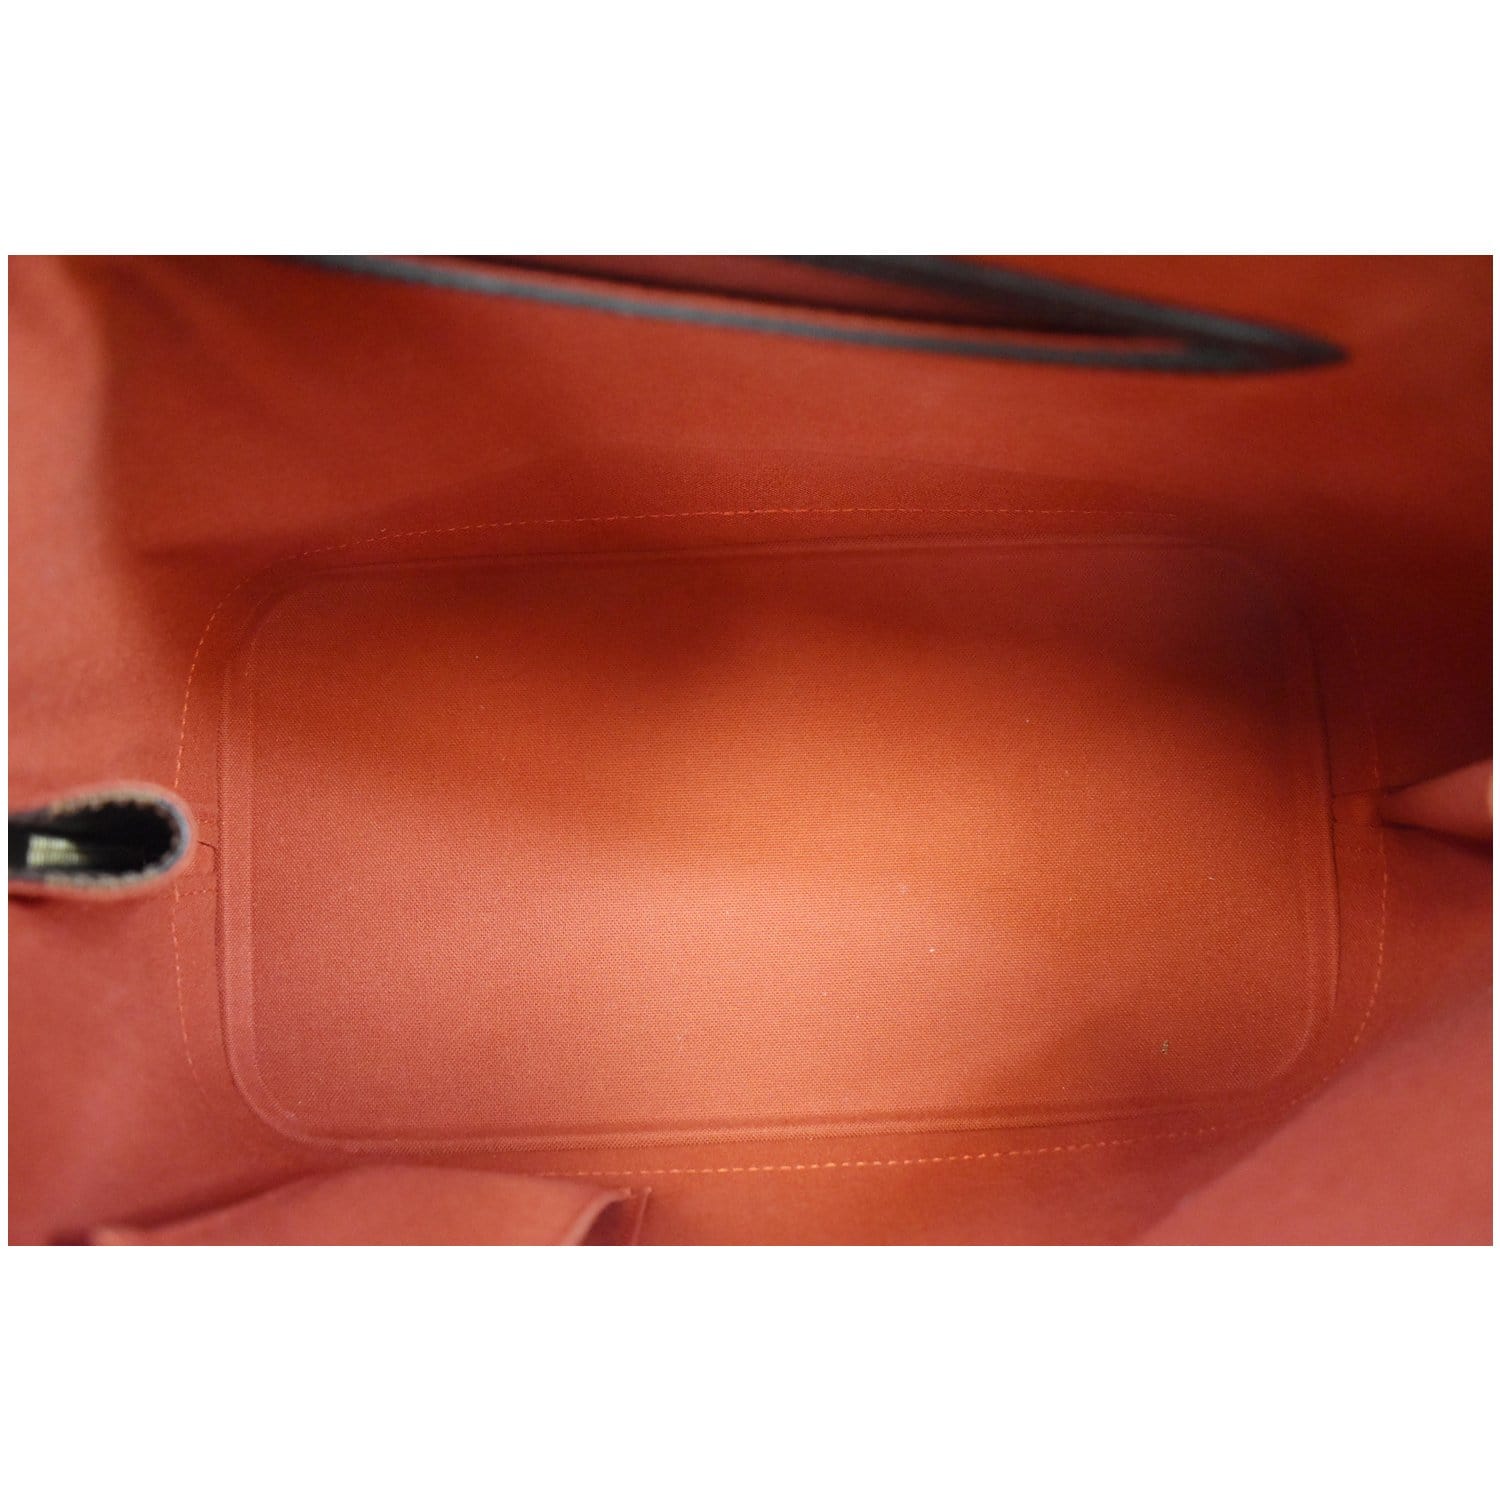 Alma PM Damier Ebene in Brown - Handbags N53151, LOUIS VUITTON ®